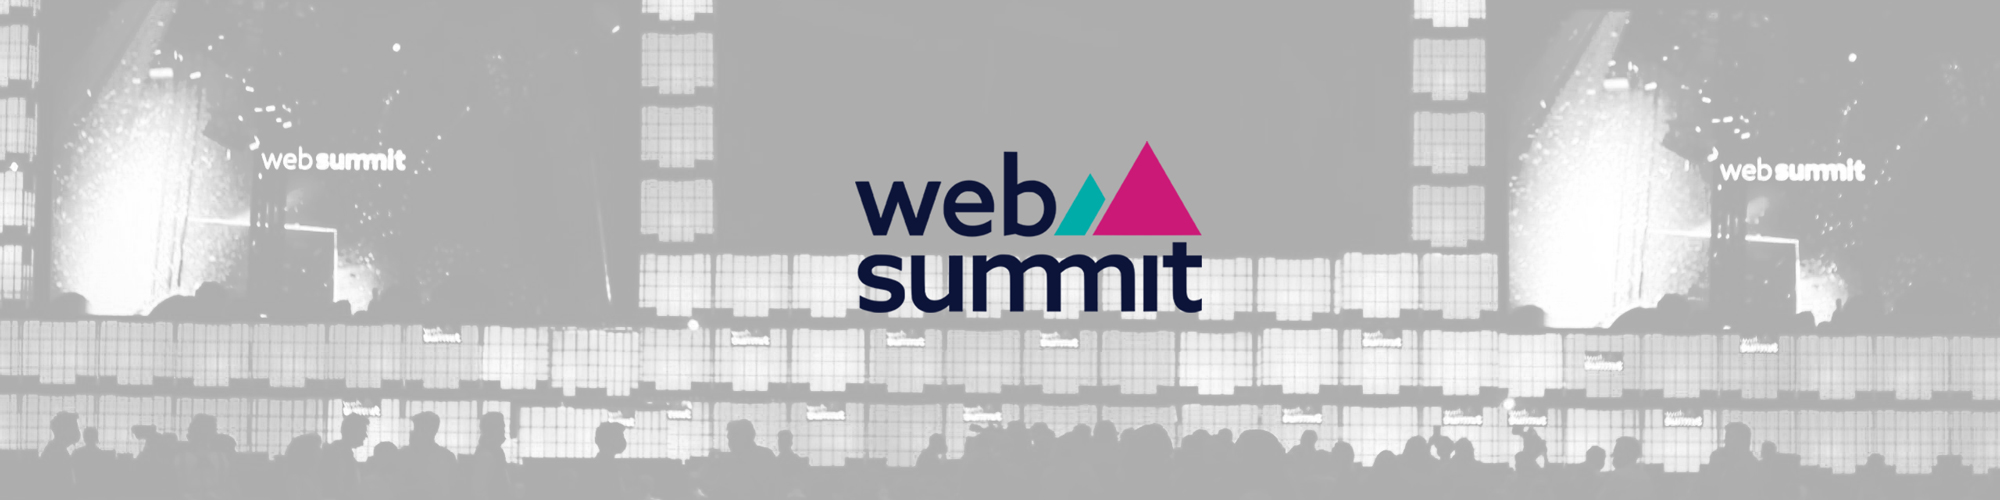 Weh summit logo